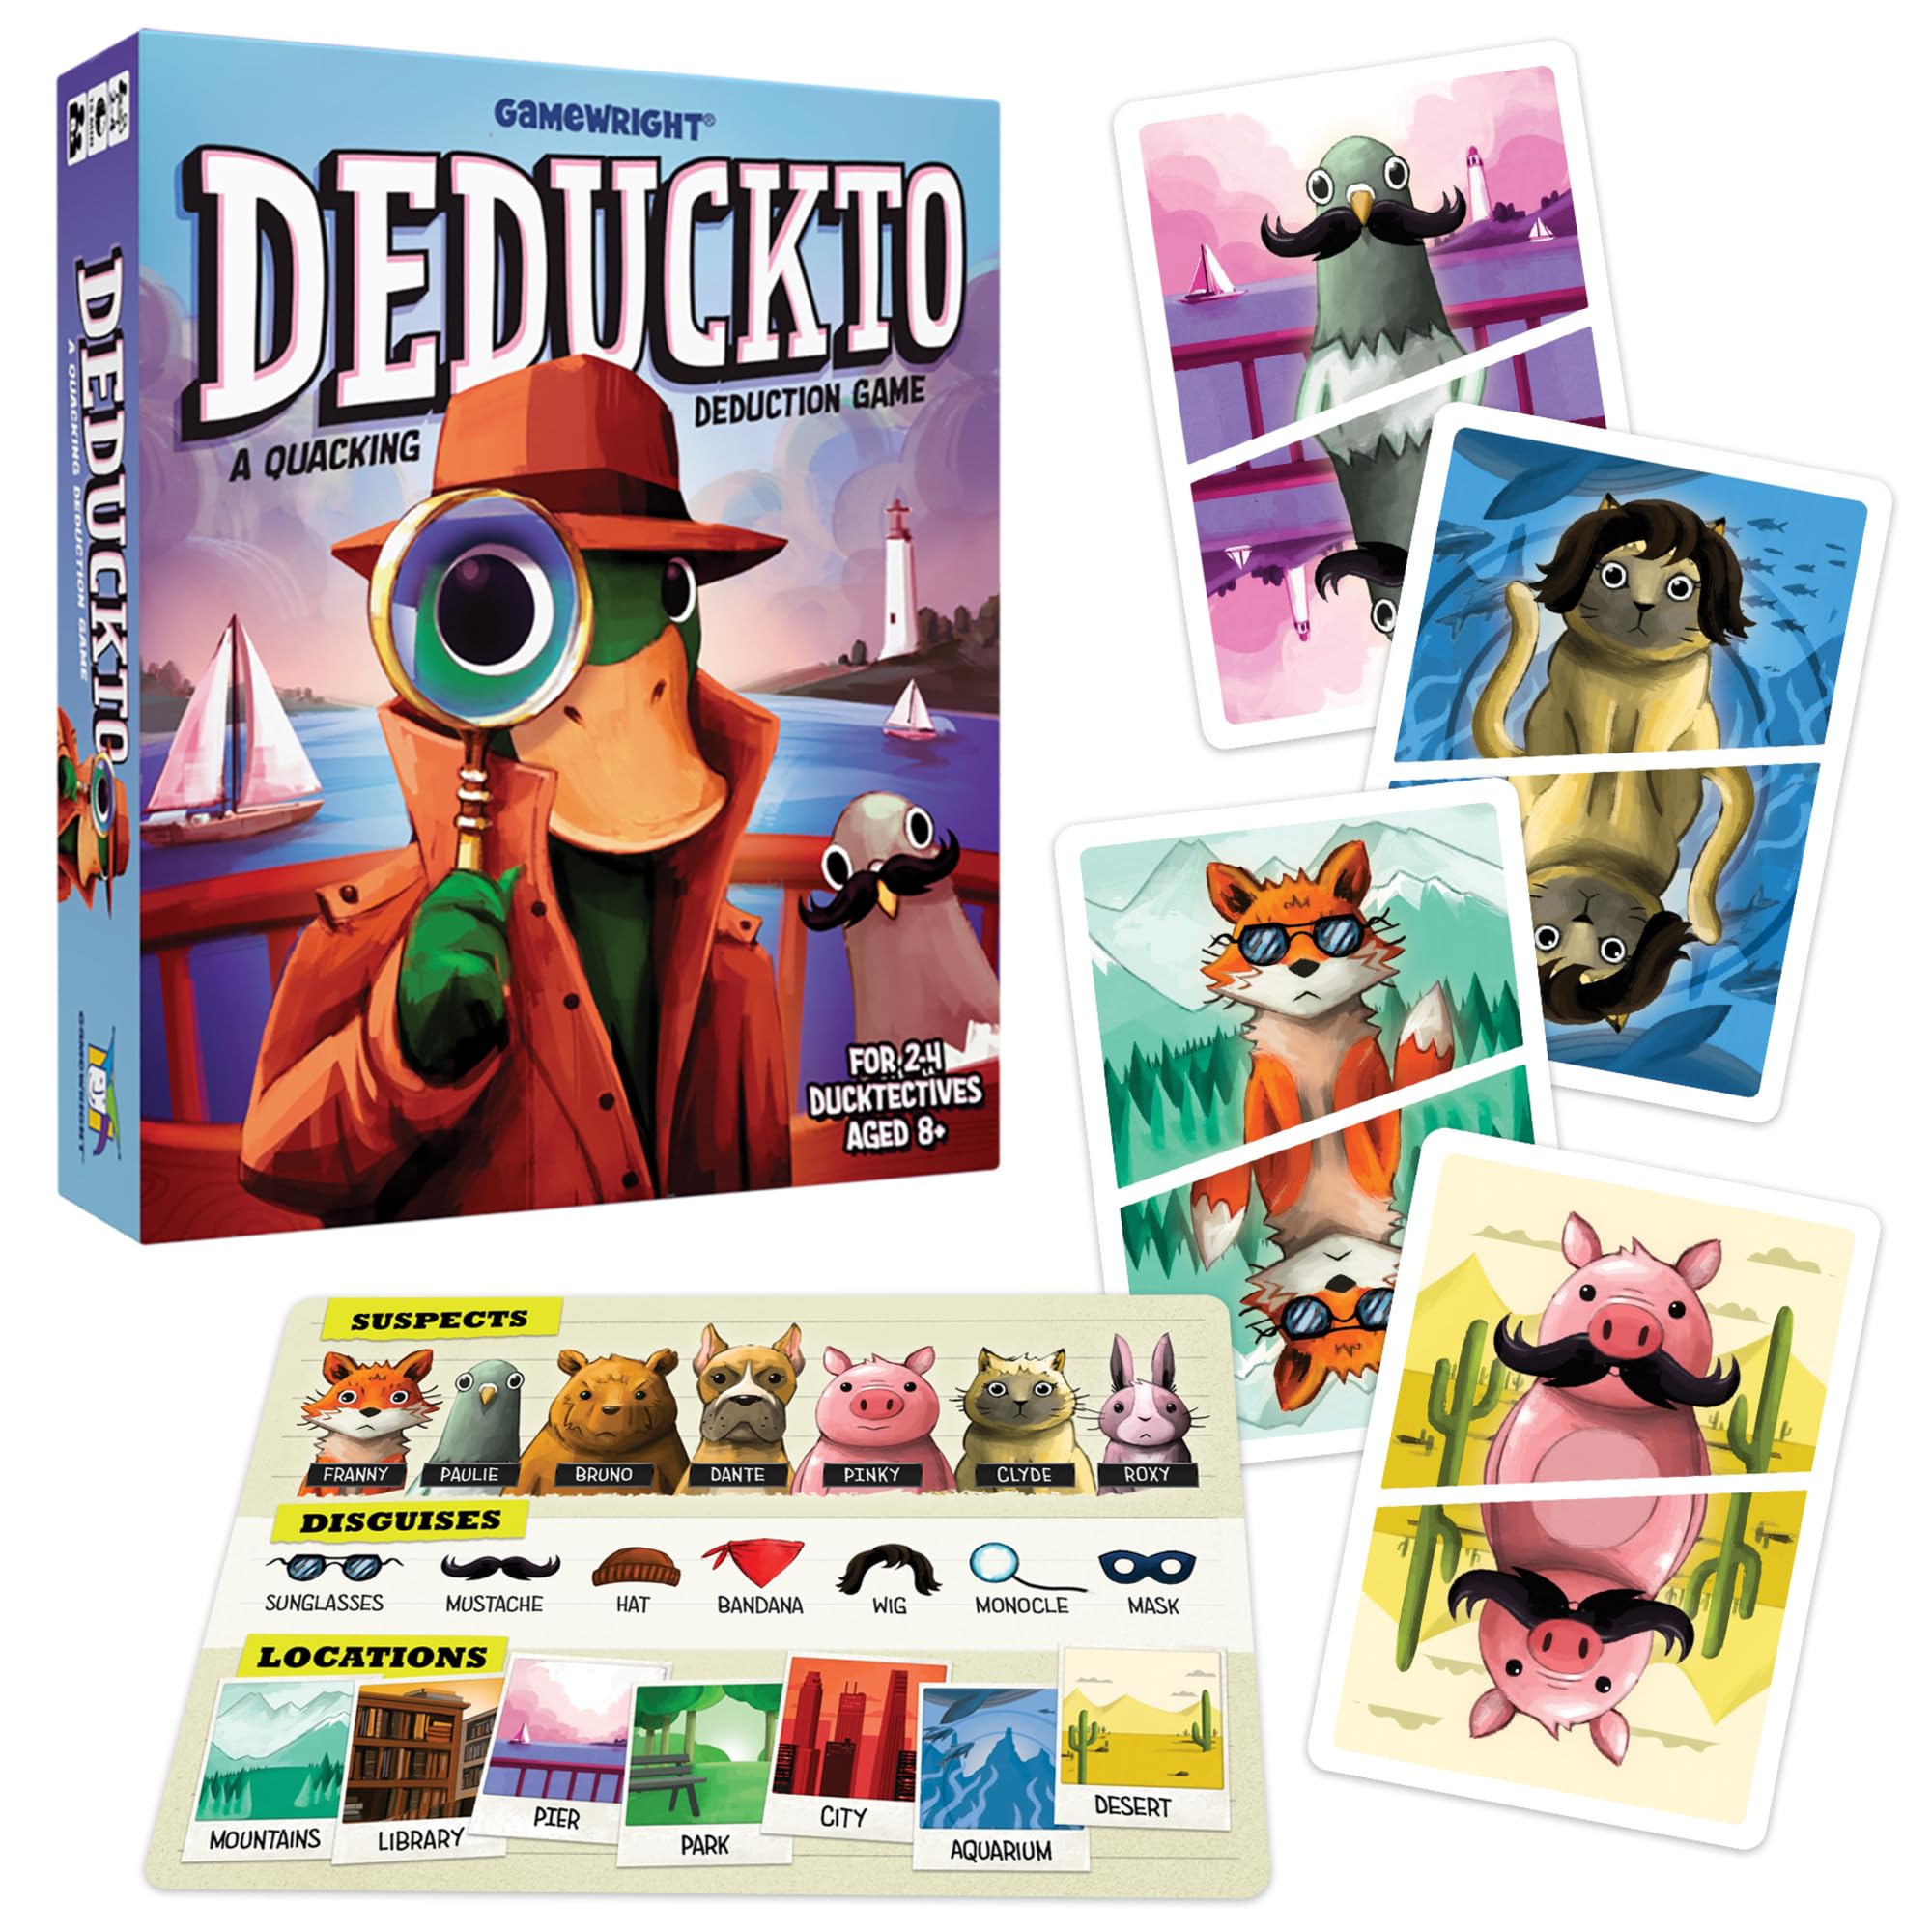 Gamewright - Deduckto - A Quackling Deduction Game - Card Game